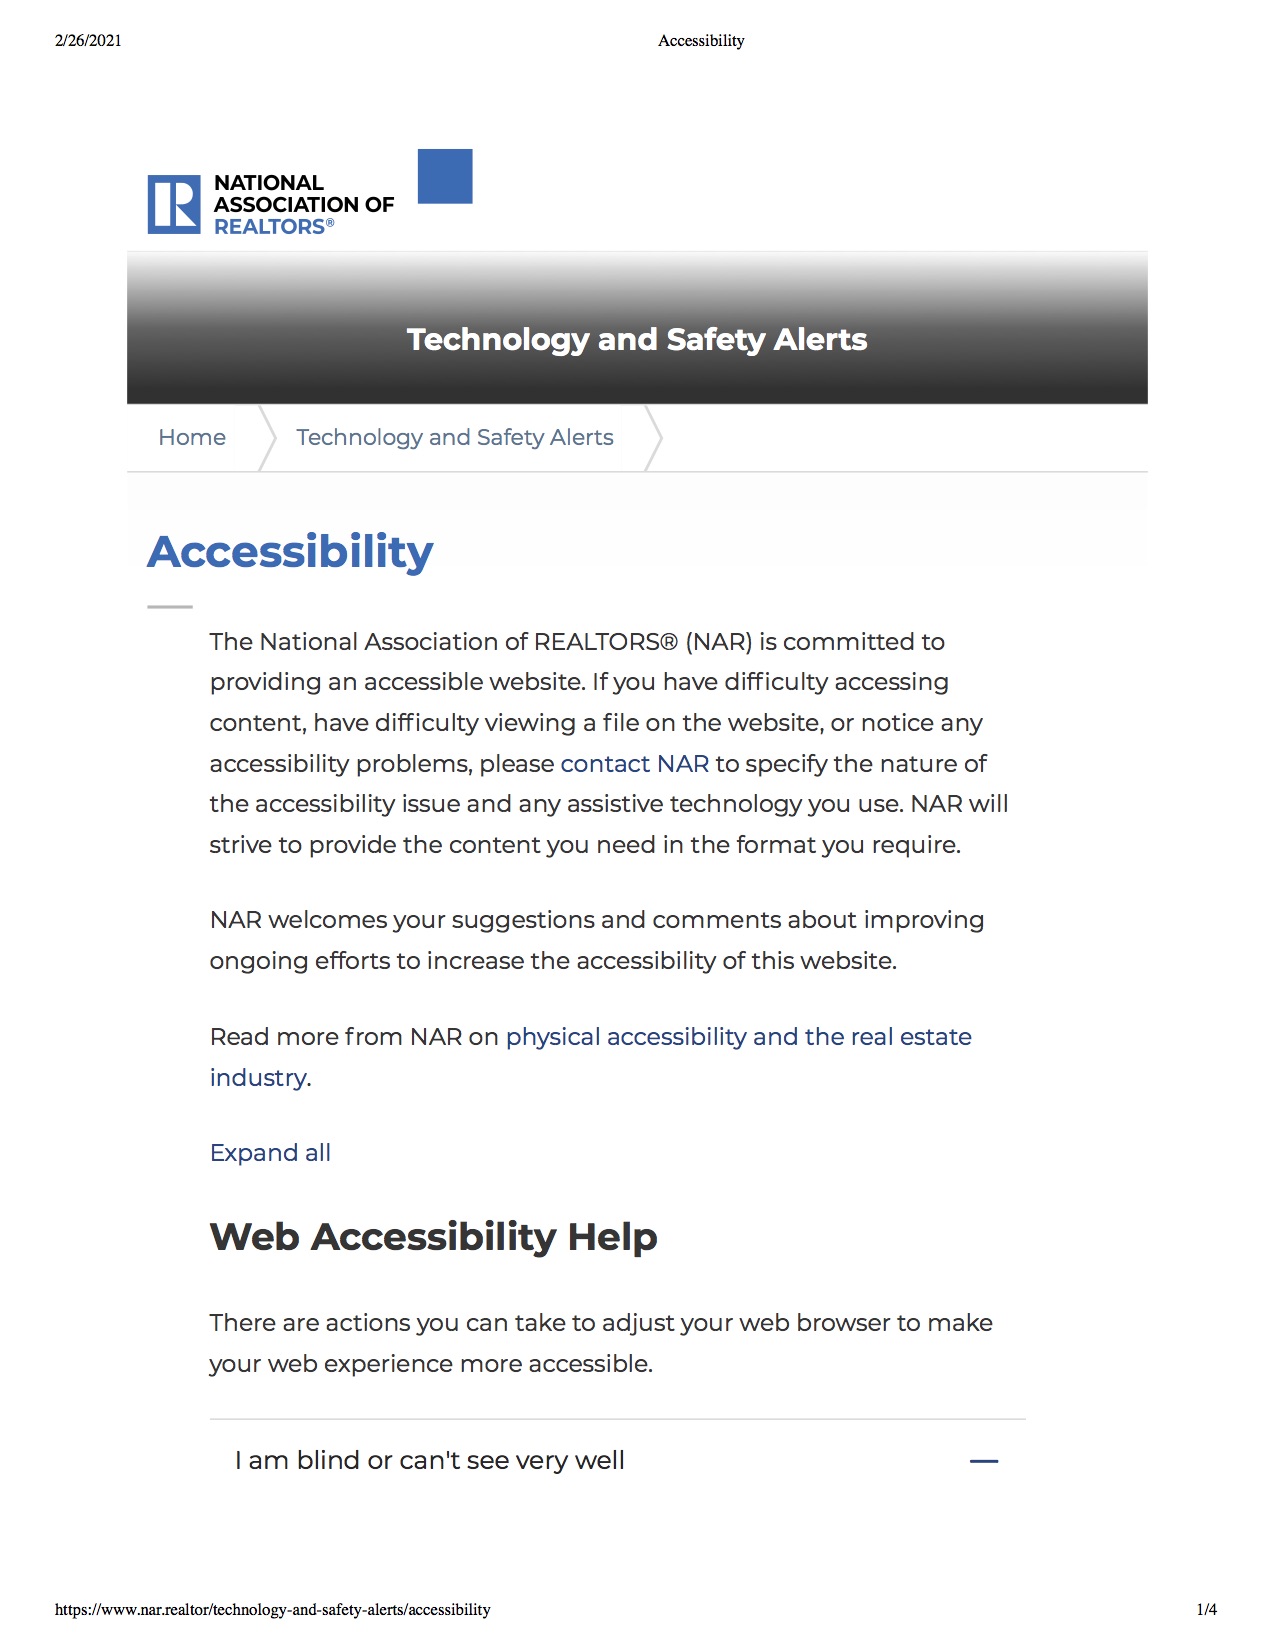 Accessibility.jpg